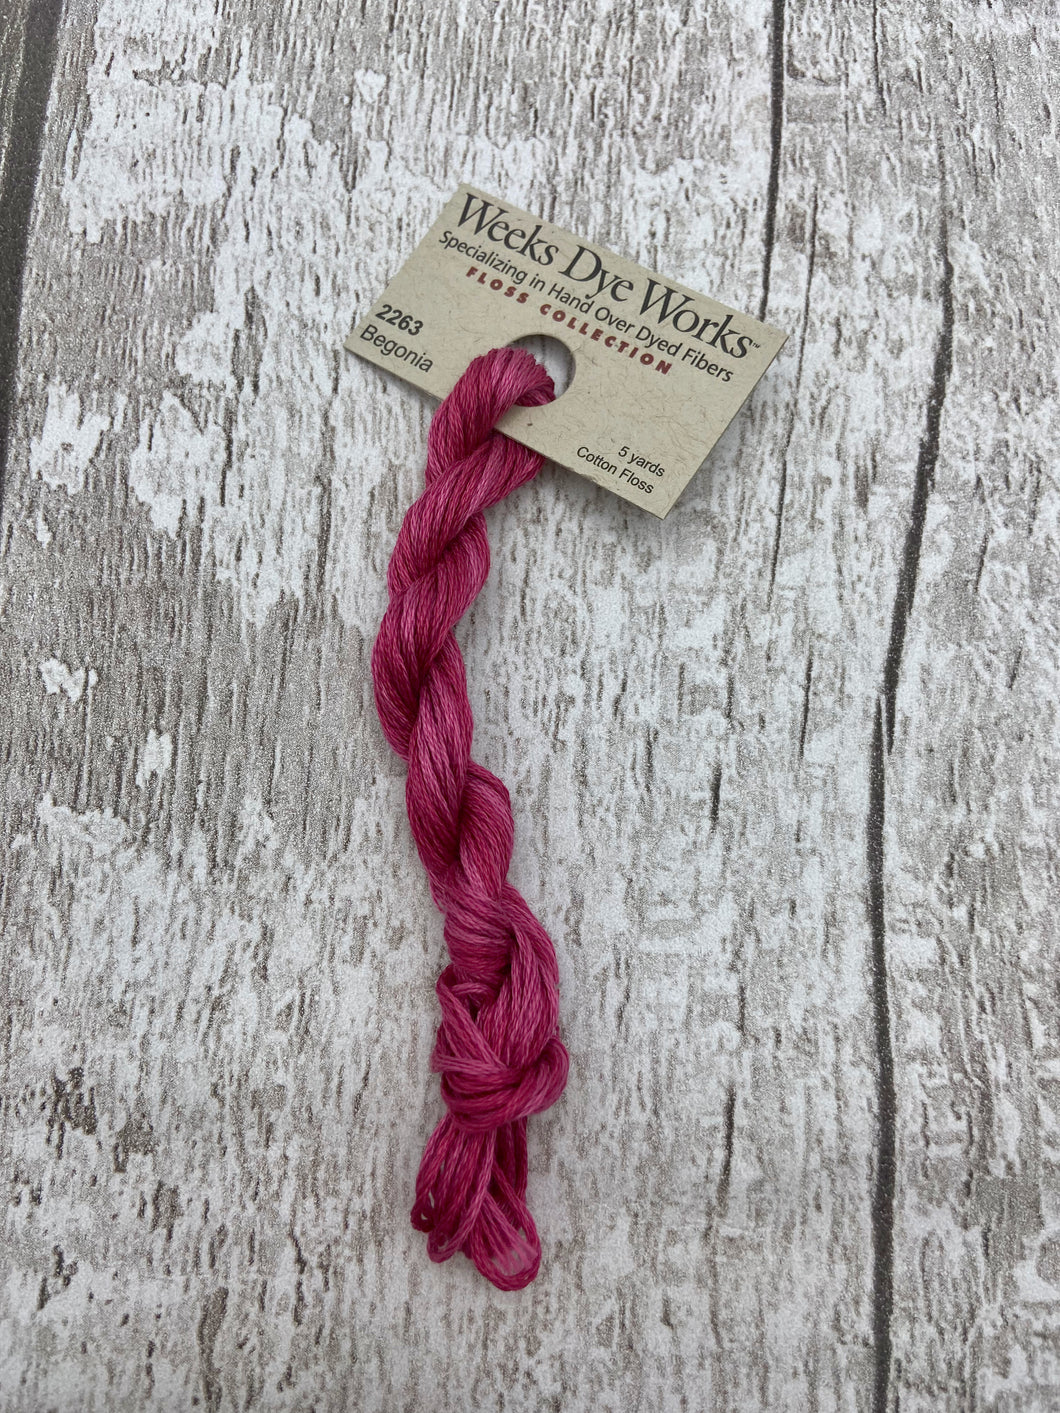 Begonia (#2263), Weeks Dye Works 6-strand cotton floss